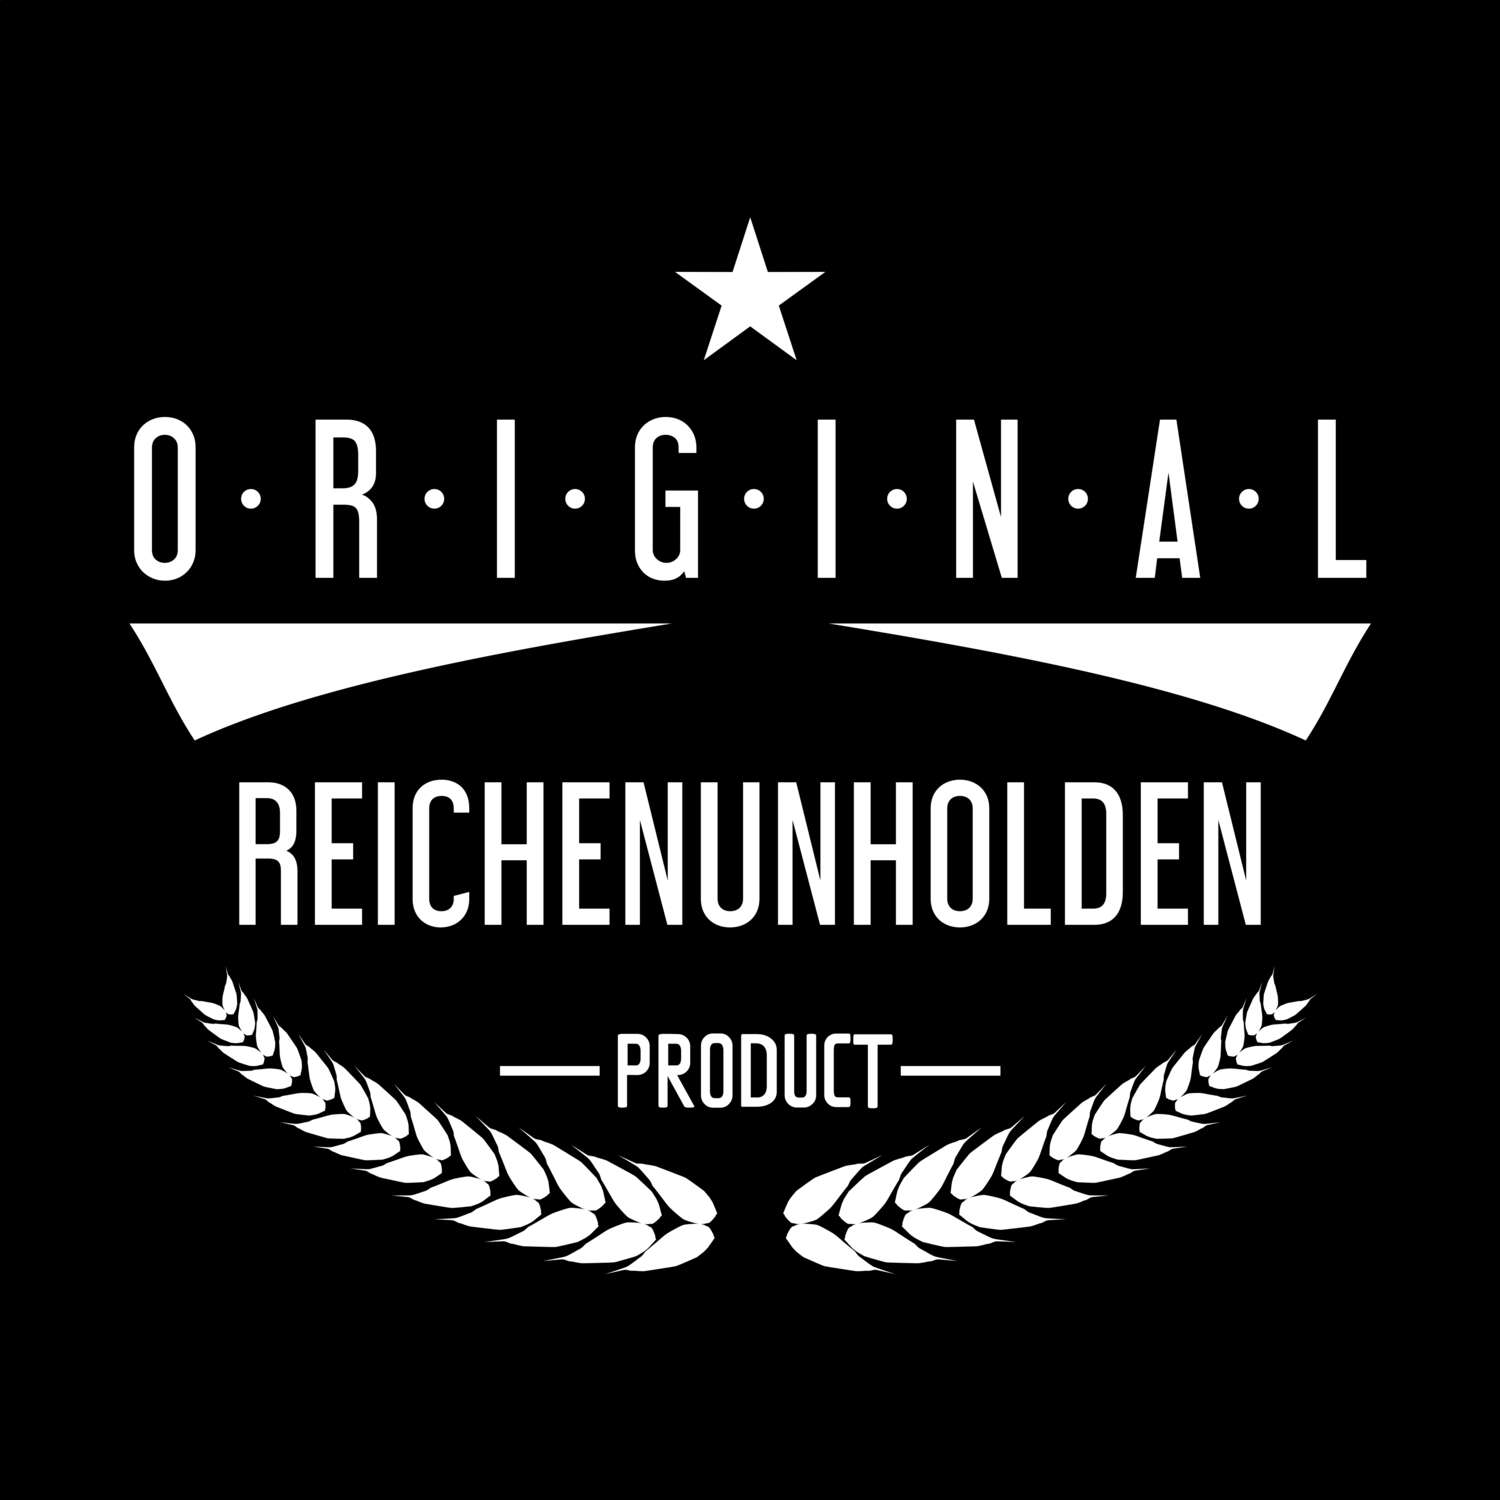 Reichenunholden T-Shirt »Original Product«